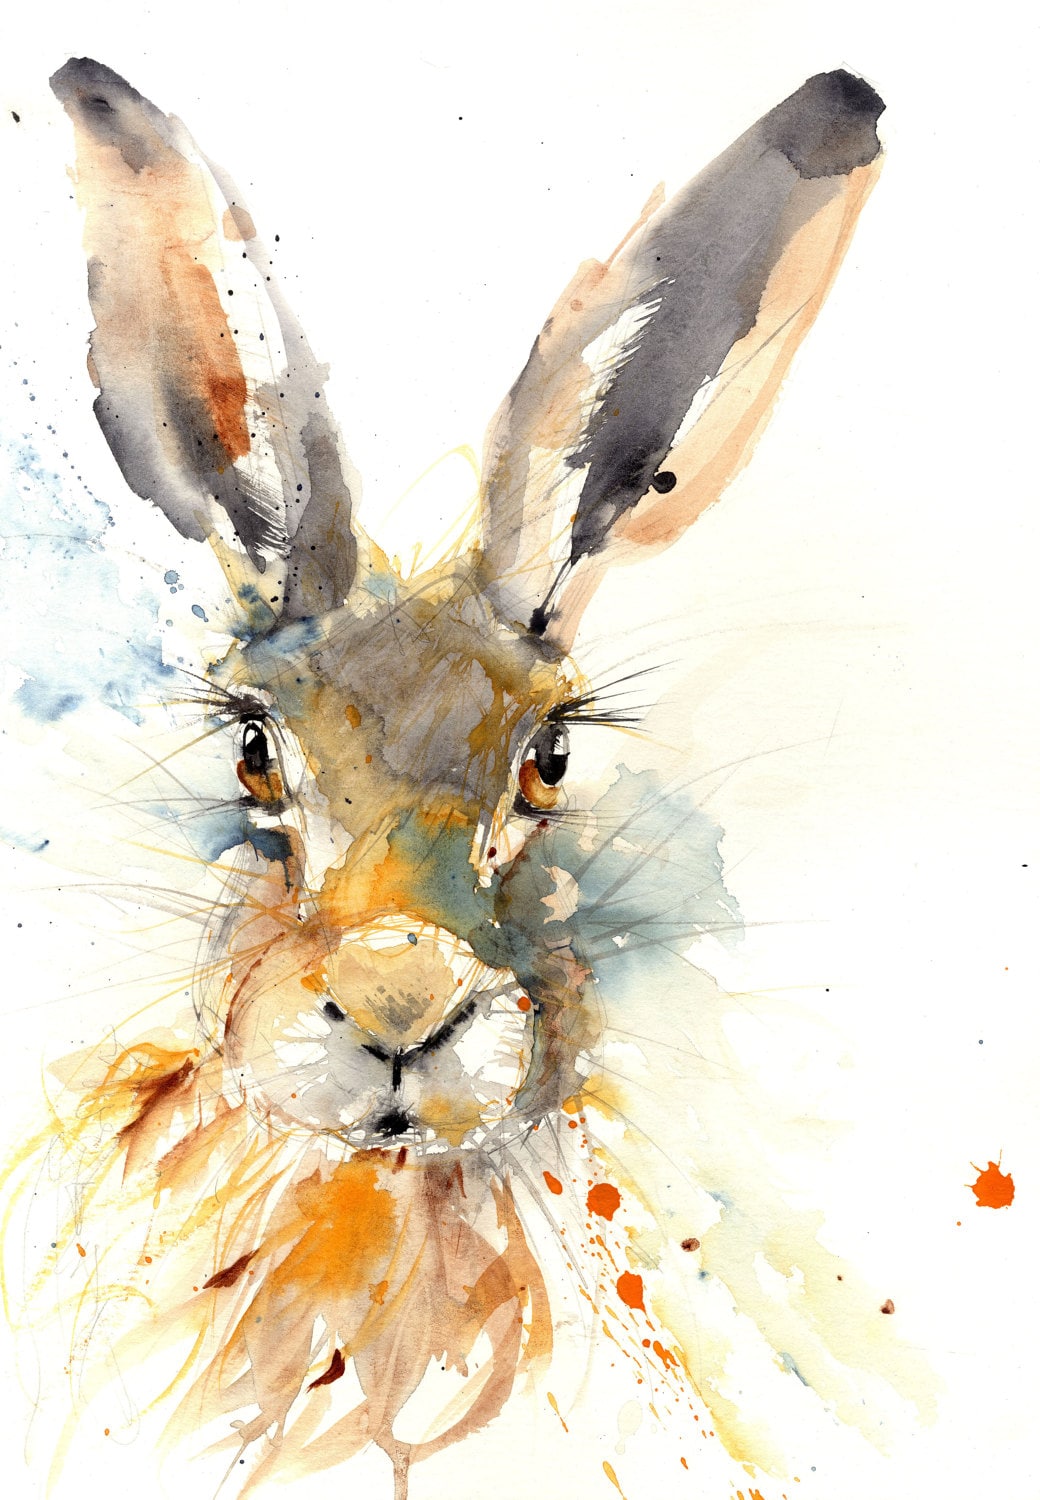 Sale,Original Card Meadow Hare Print Watercolour Gift Wildlife,Animal,Art, 